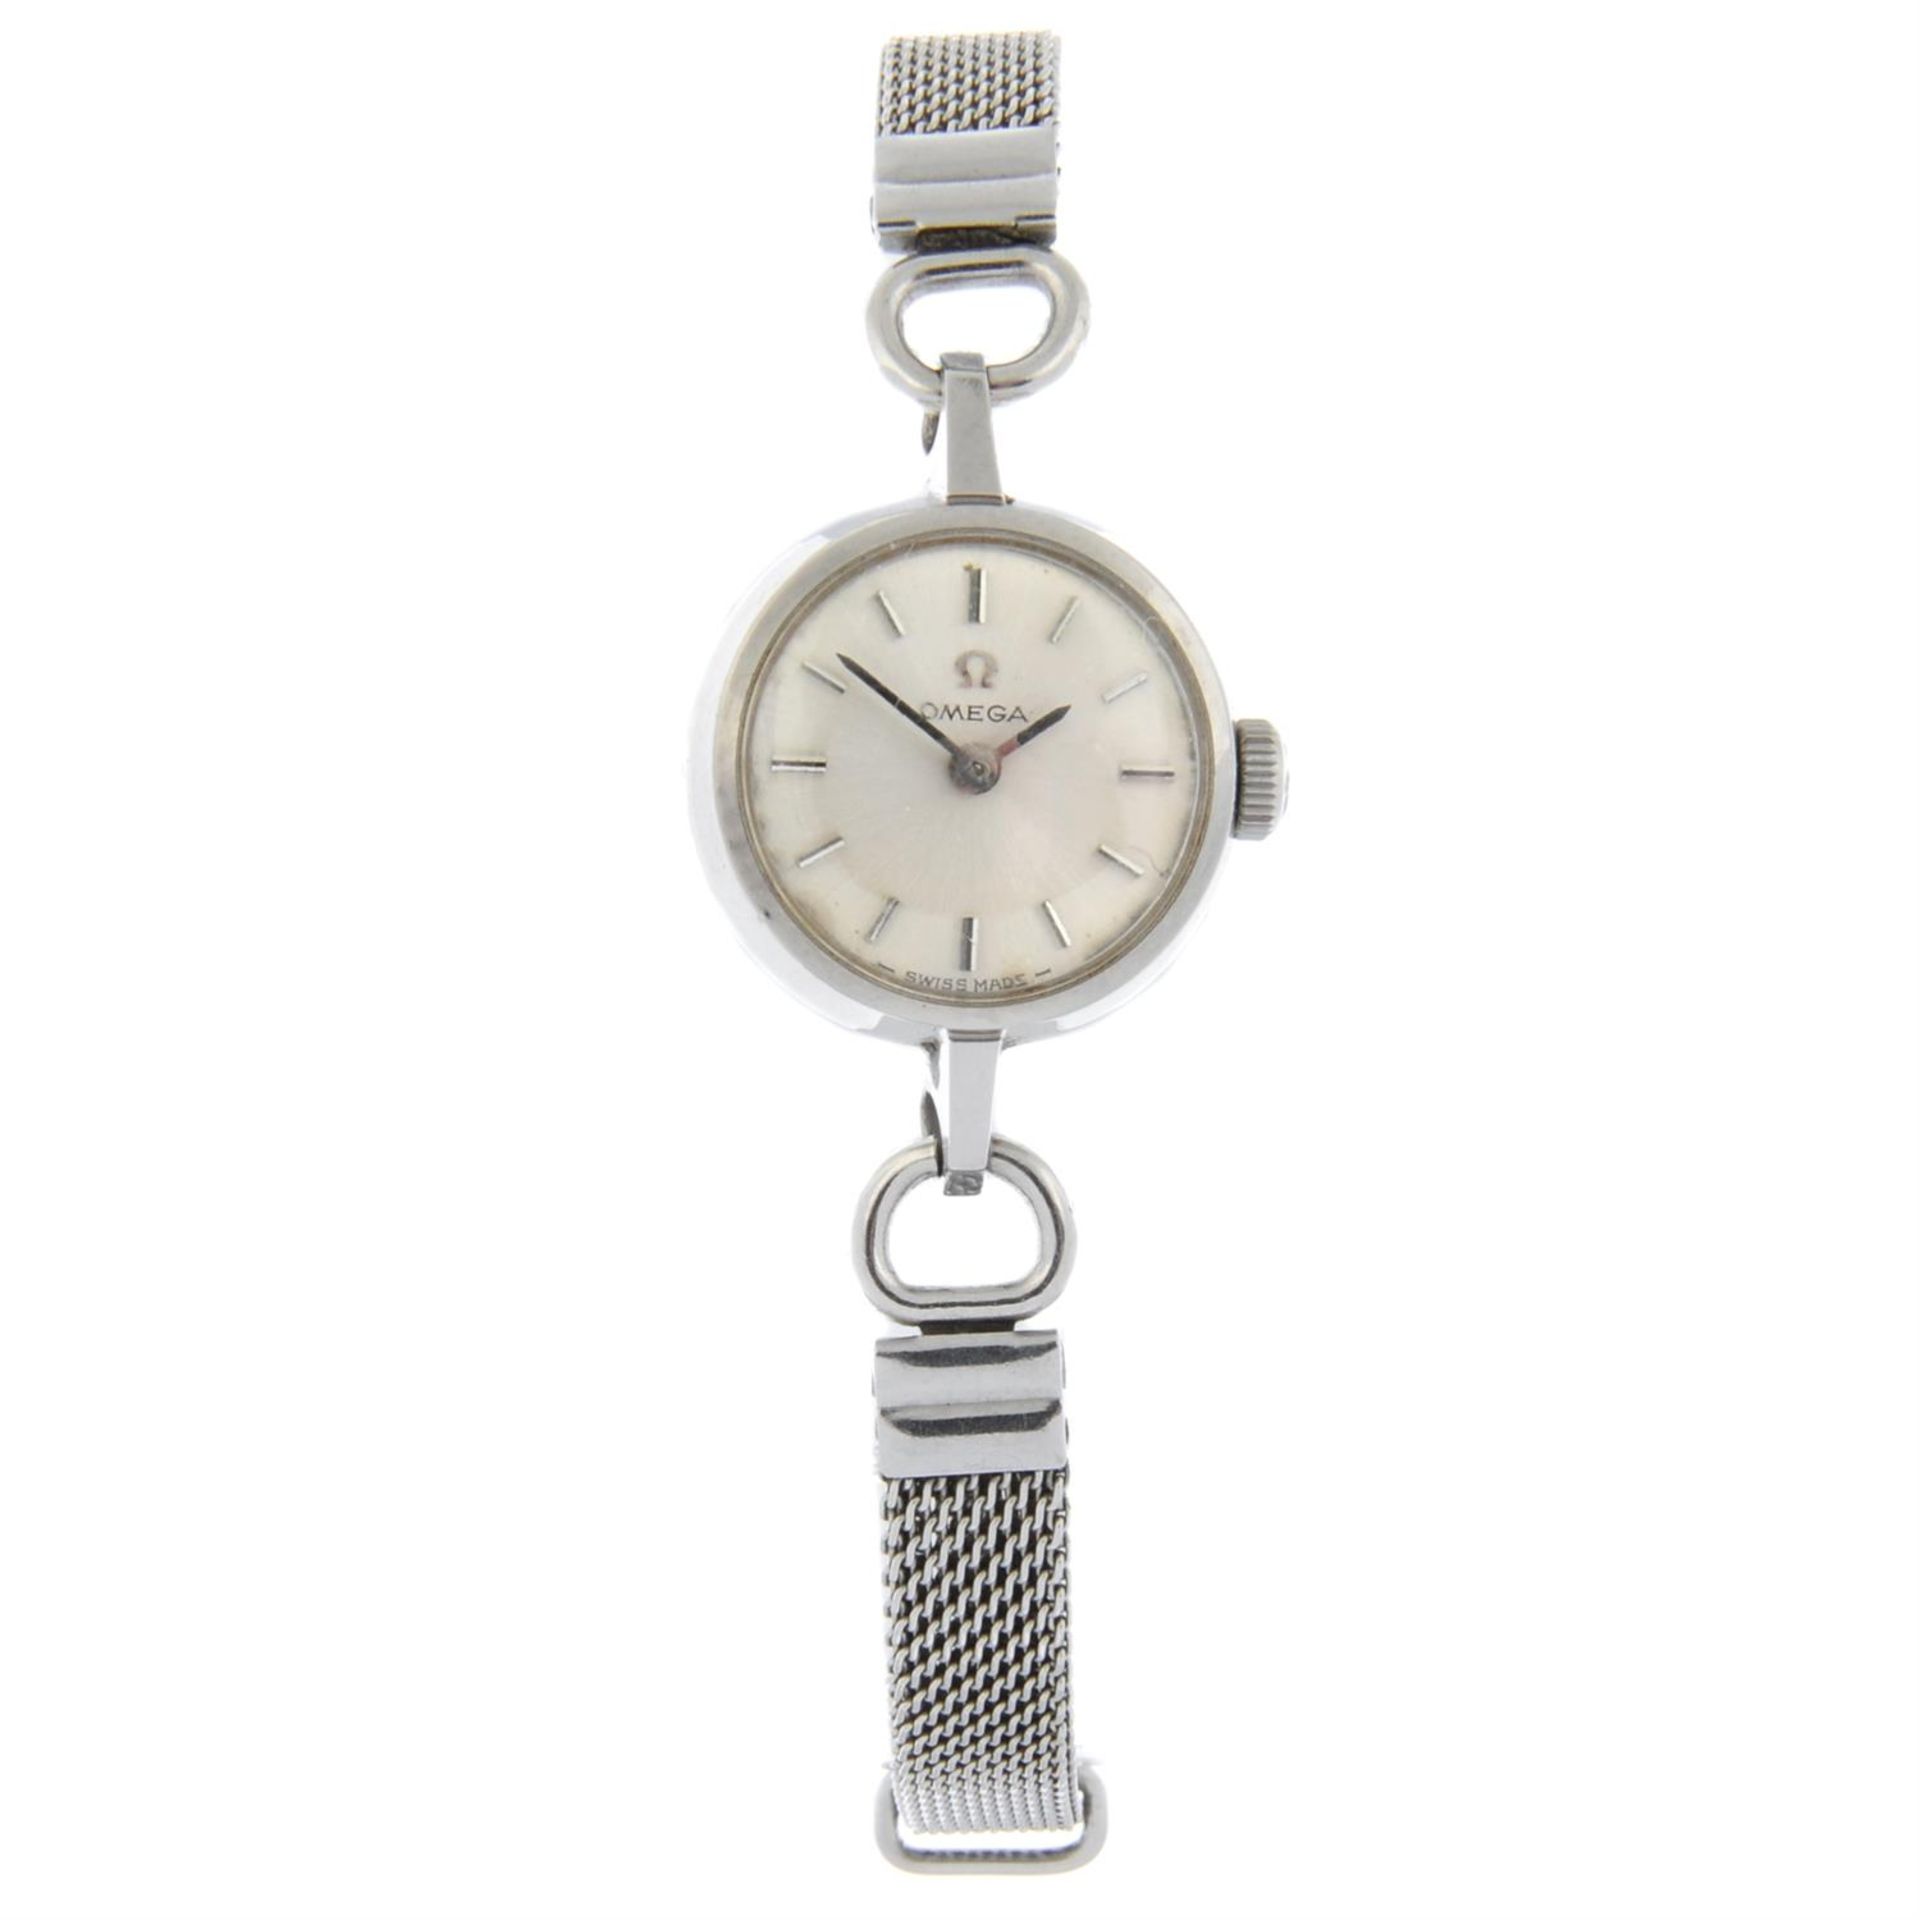 OMEGA - a stainless steel bracelet watch, 17mm.